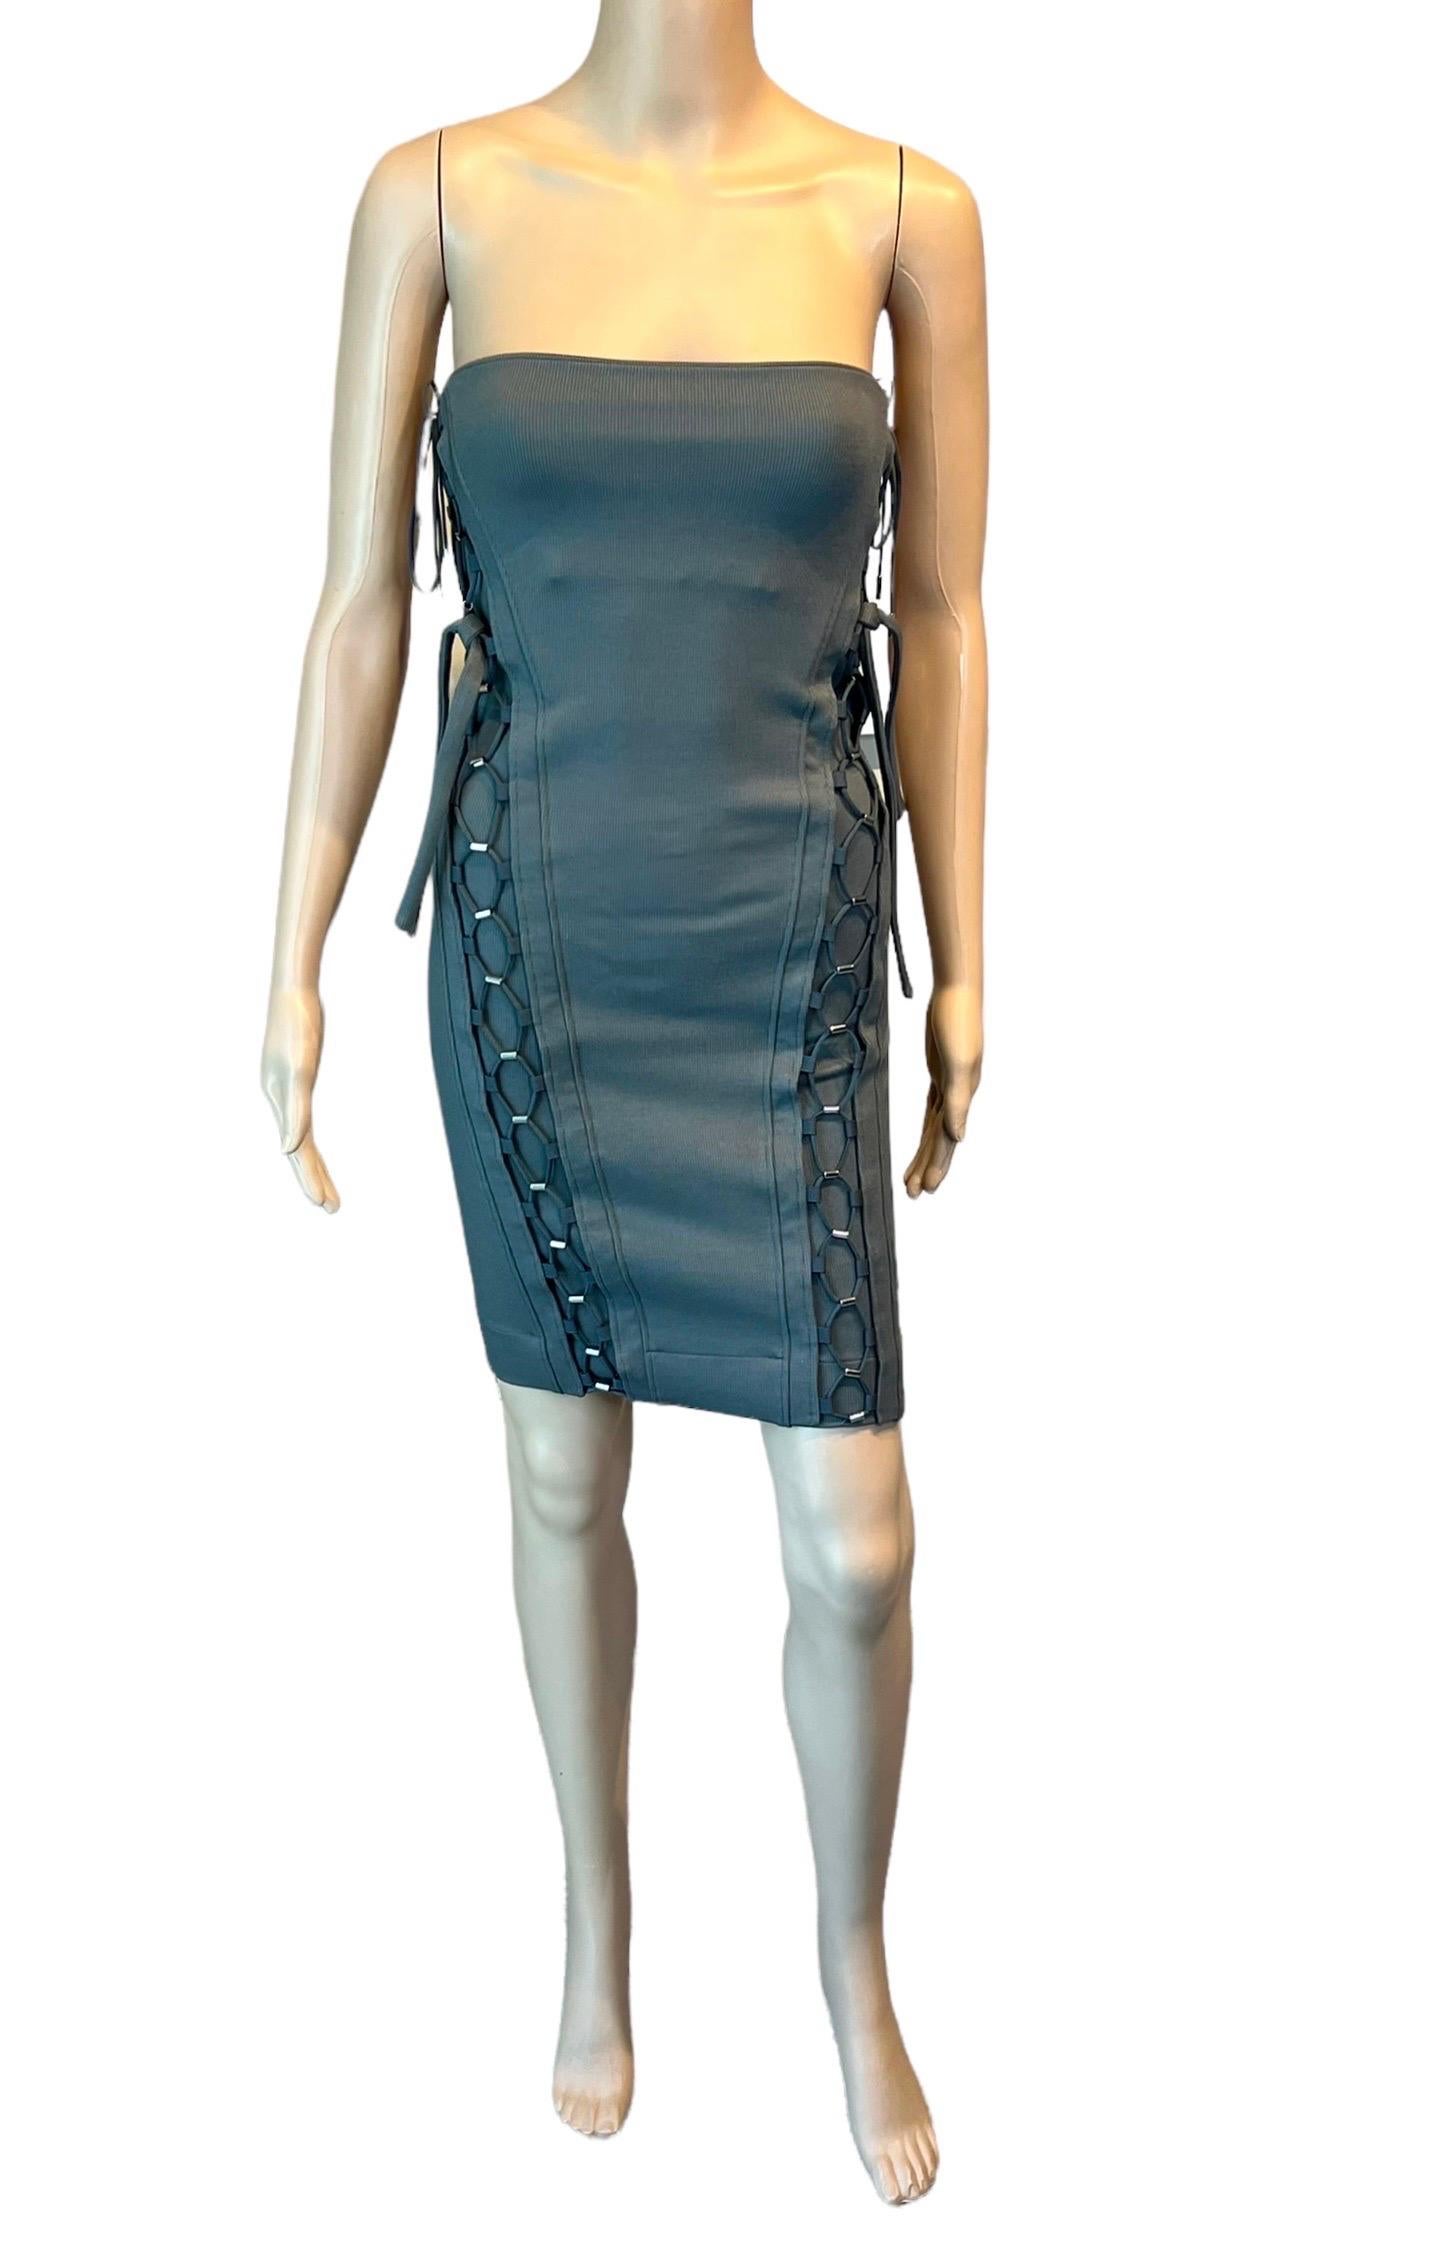 Gucci S/S 2010 Unworn Bodycon Lace Up Bandage Grey Mini Dress For Sale 4